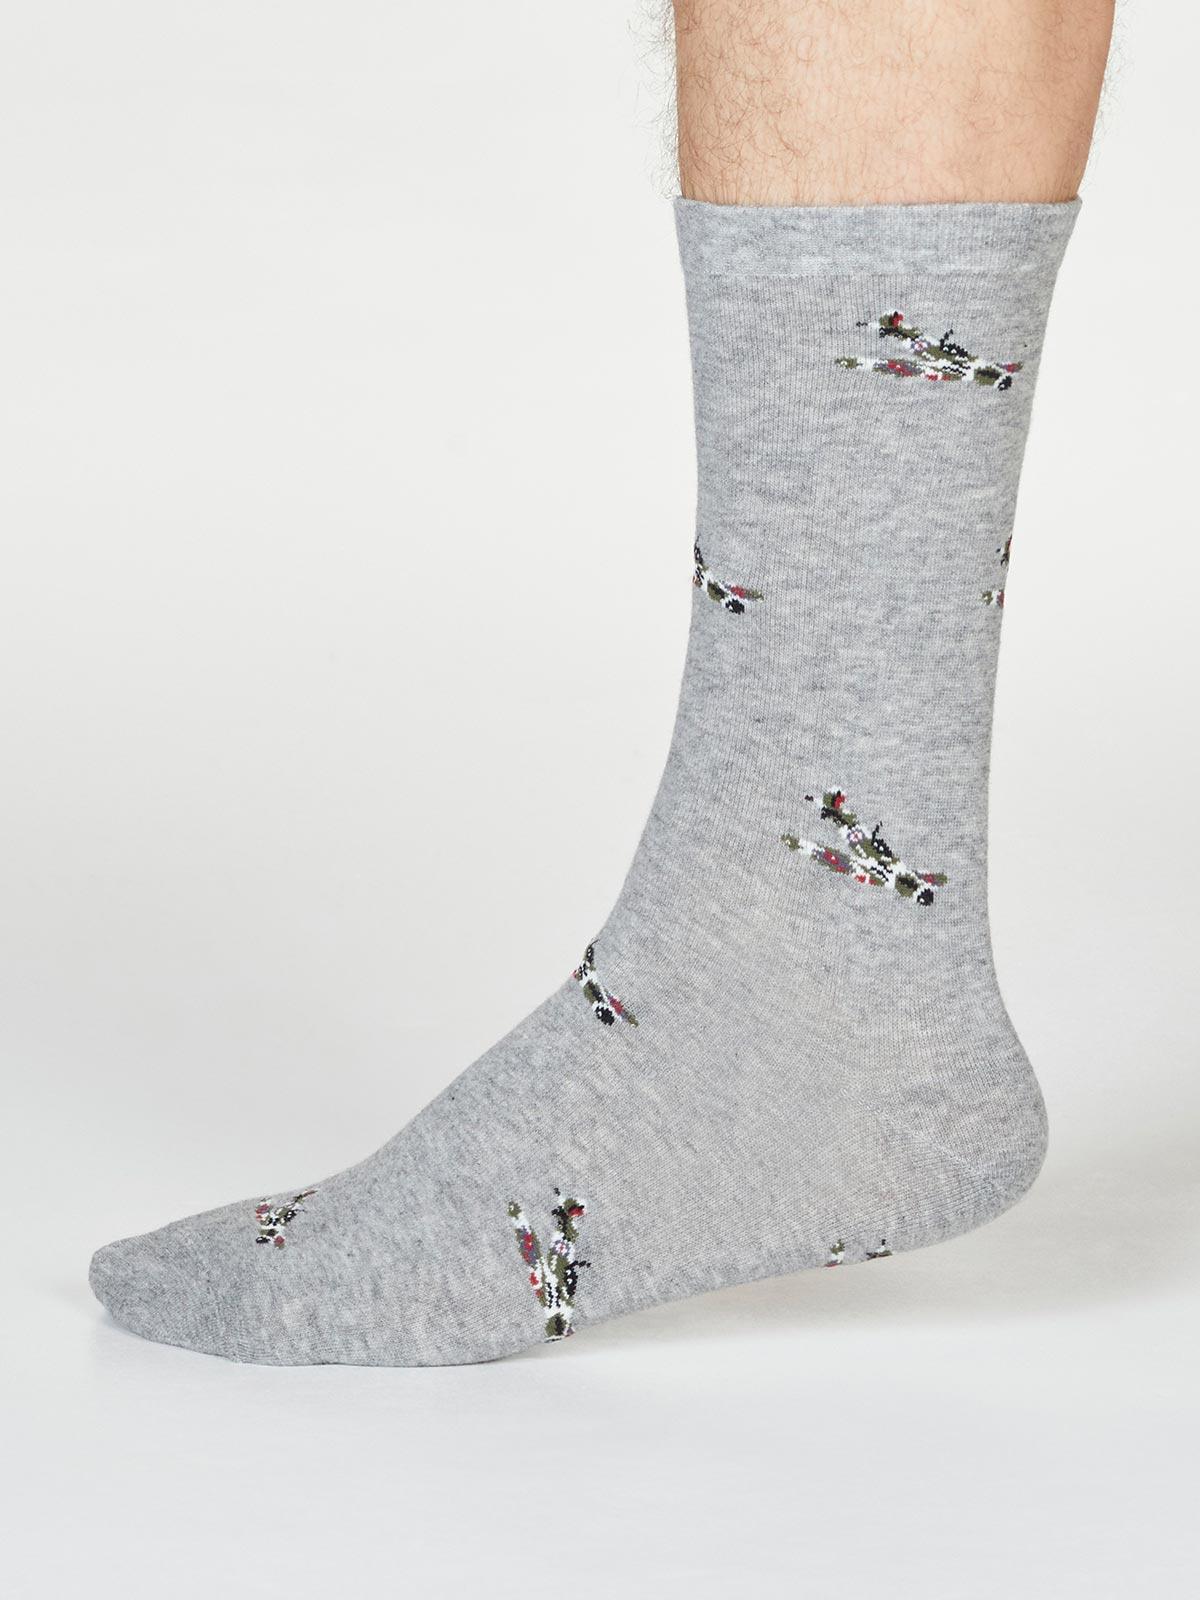 Judron Spitfire Socks - Grey Marle - Thought Clothing UK